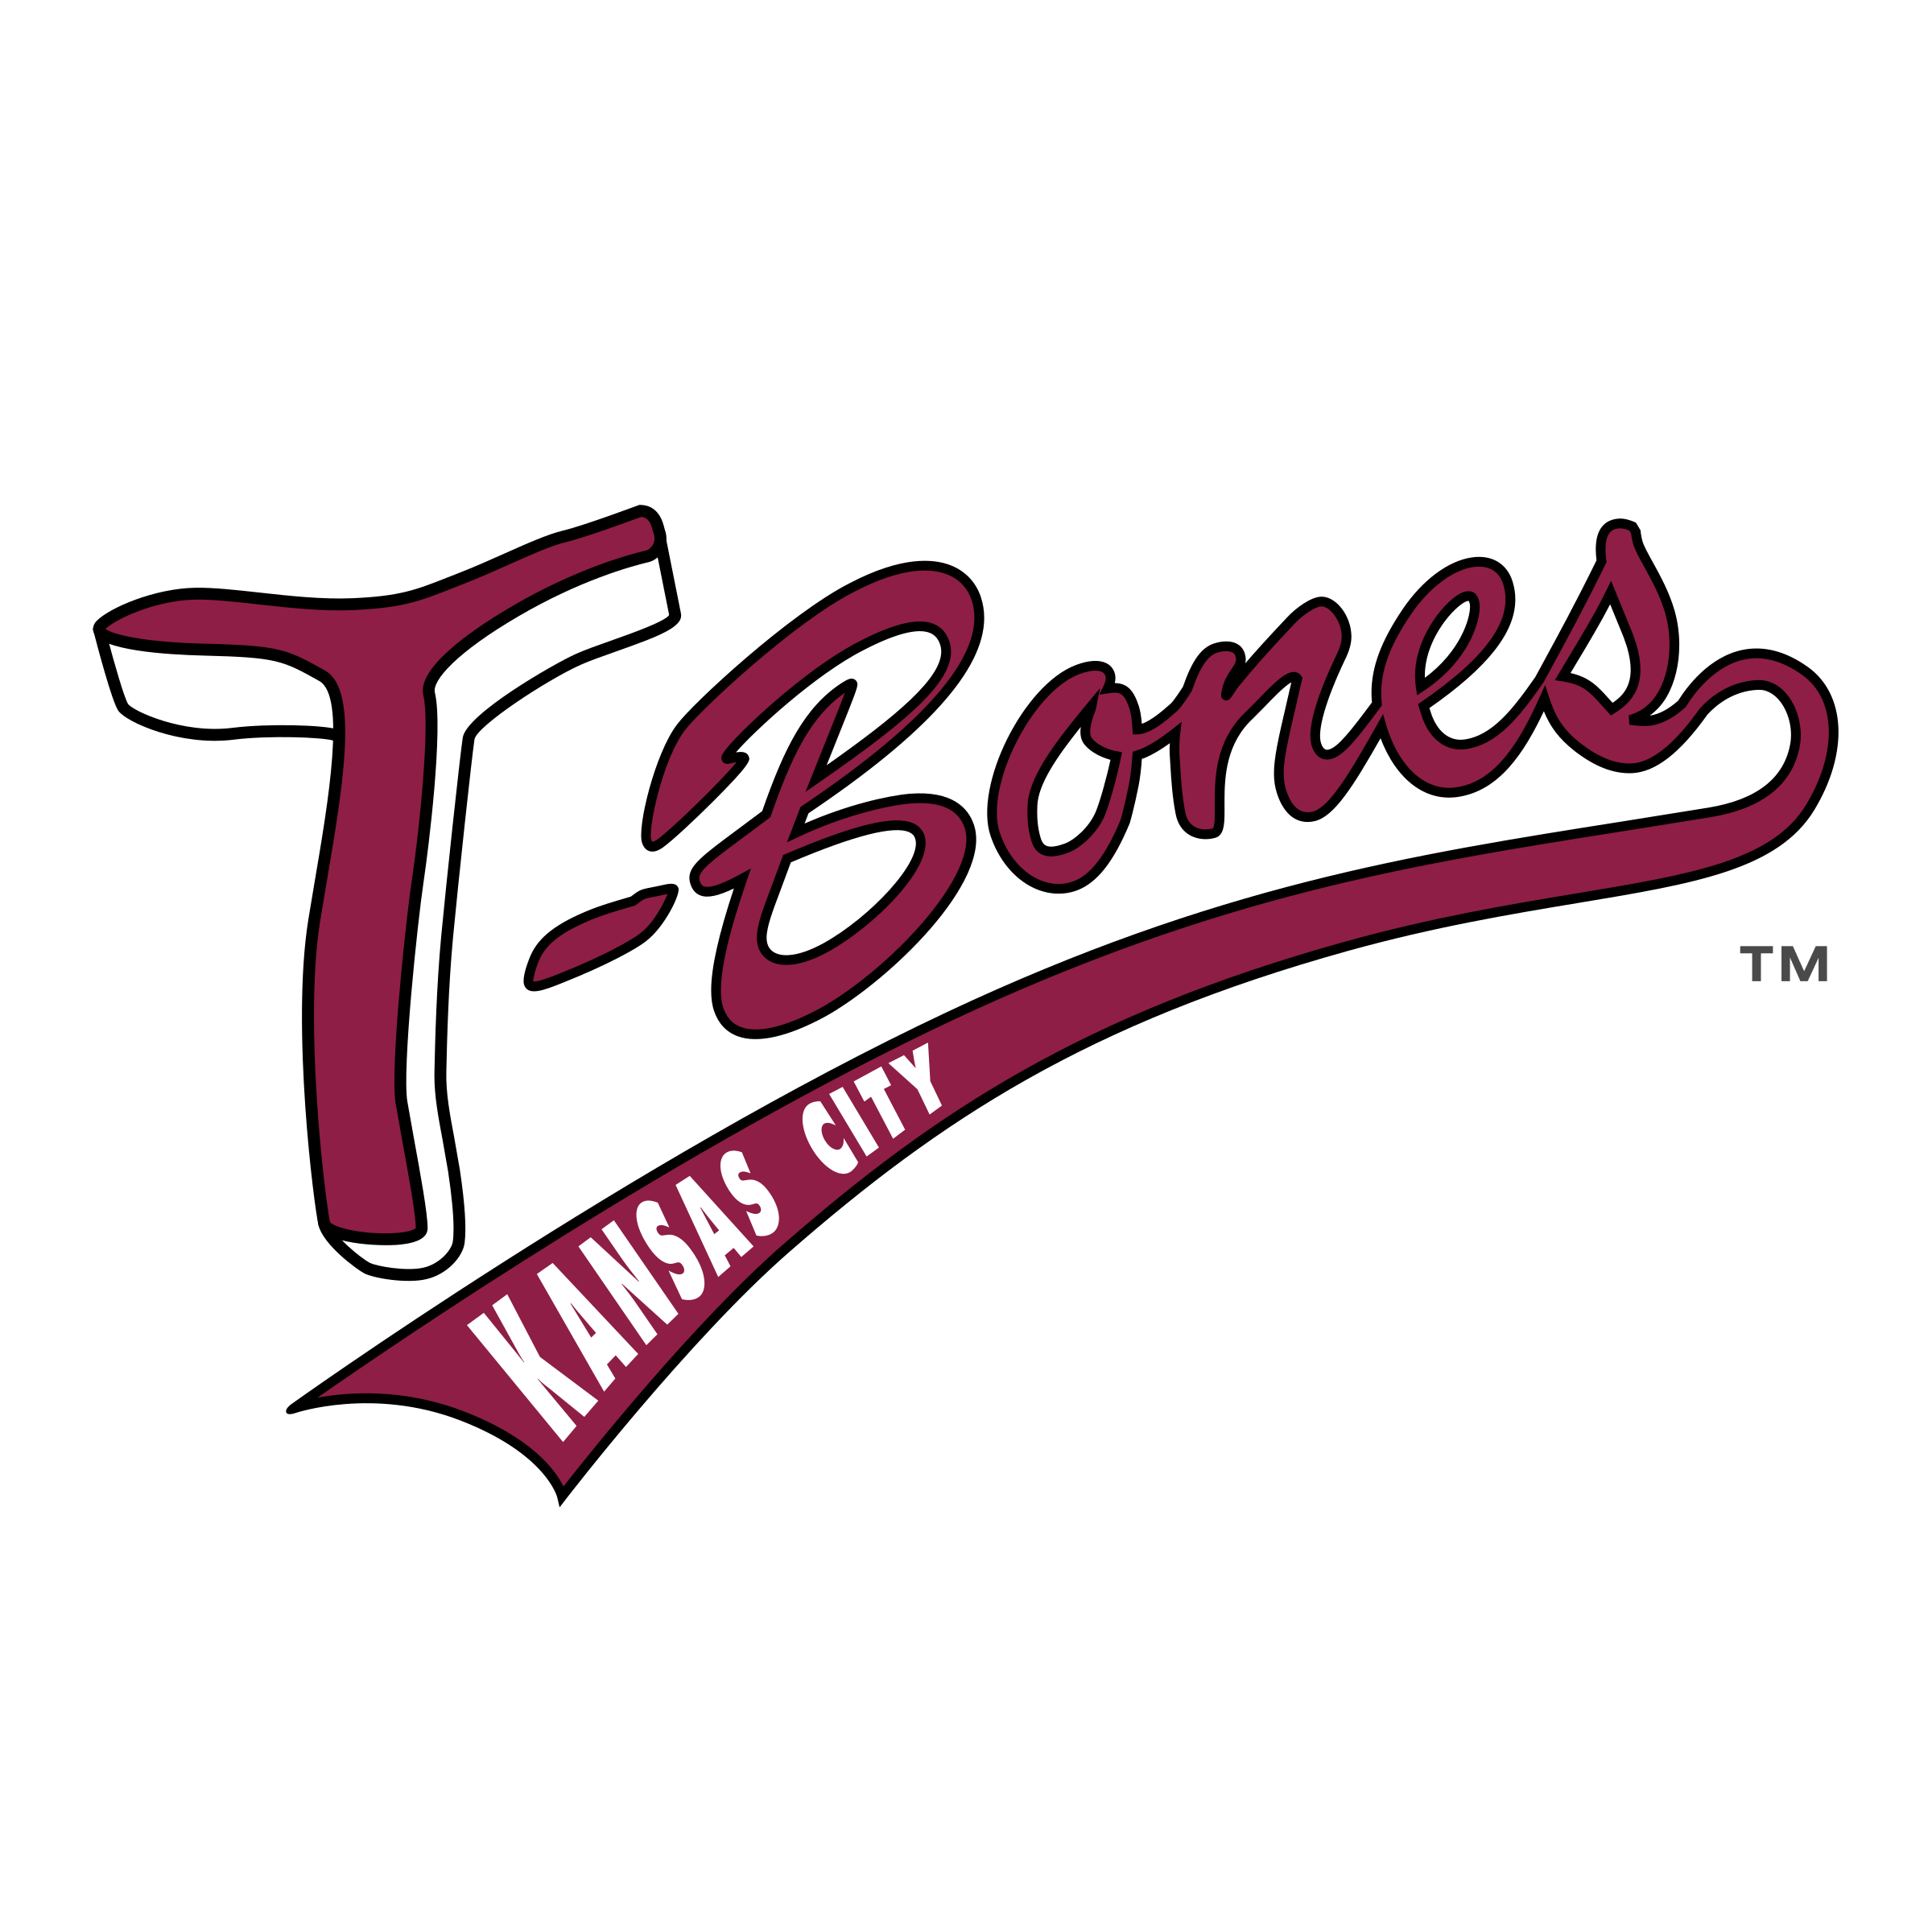 Bones Logo - Kansas City T Bones Logo PNG Transparent & SVG Vector - Freebie Supply